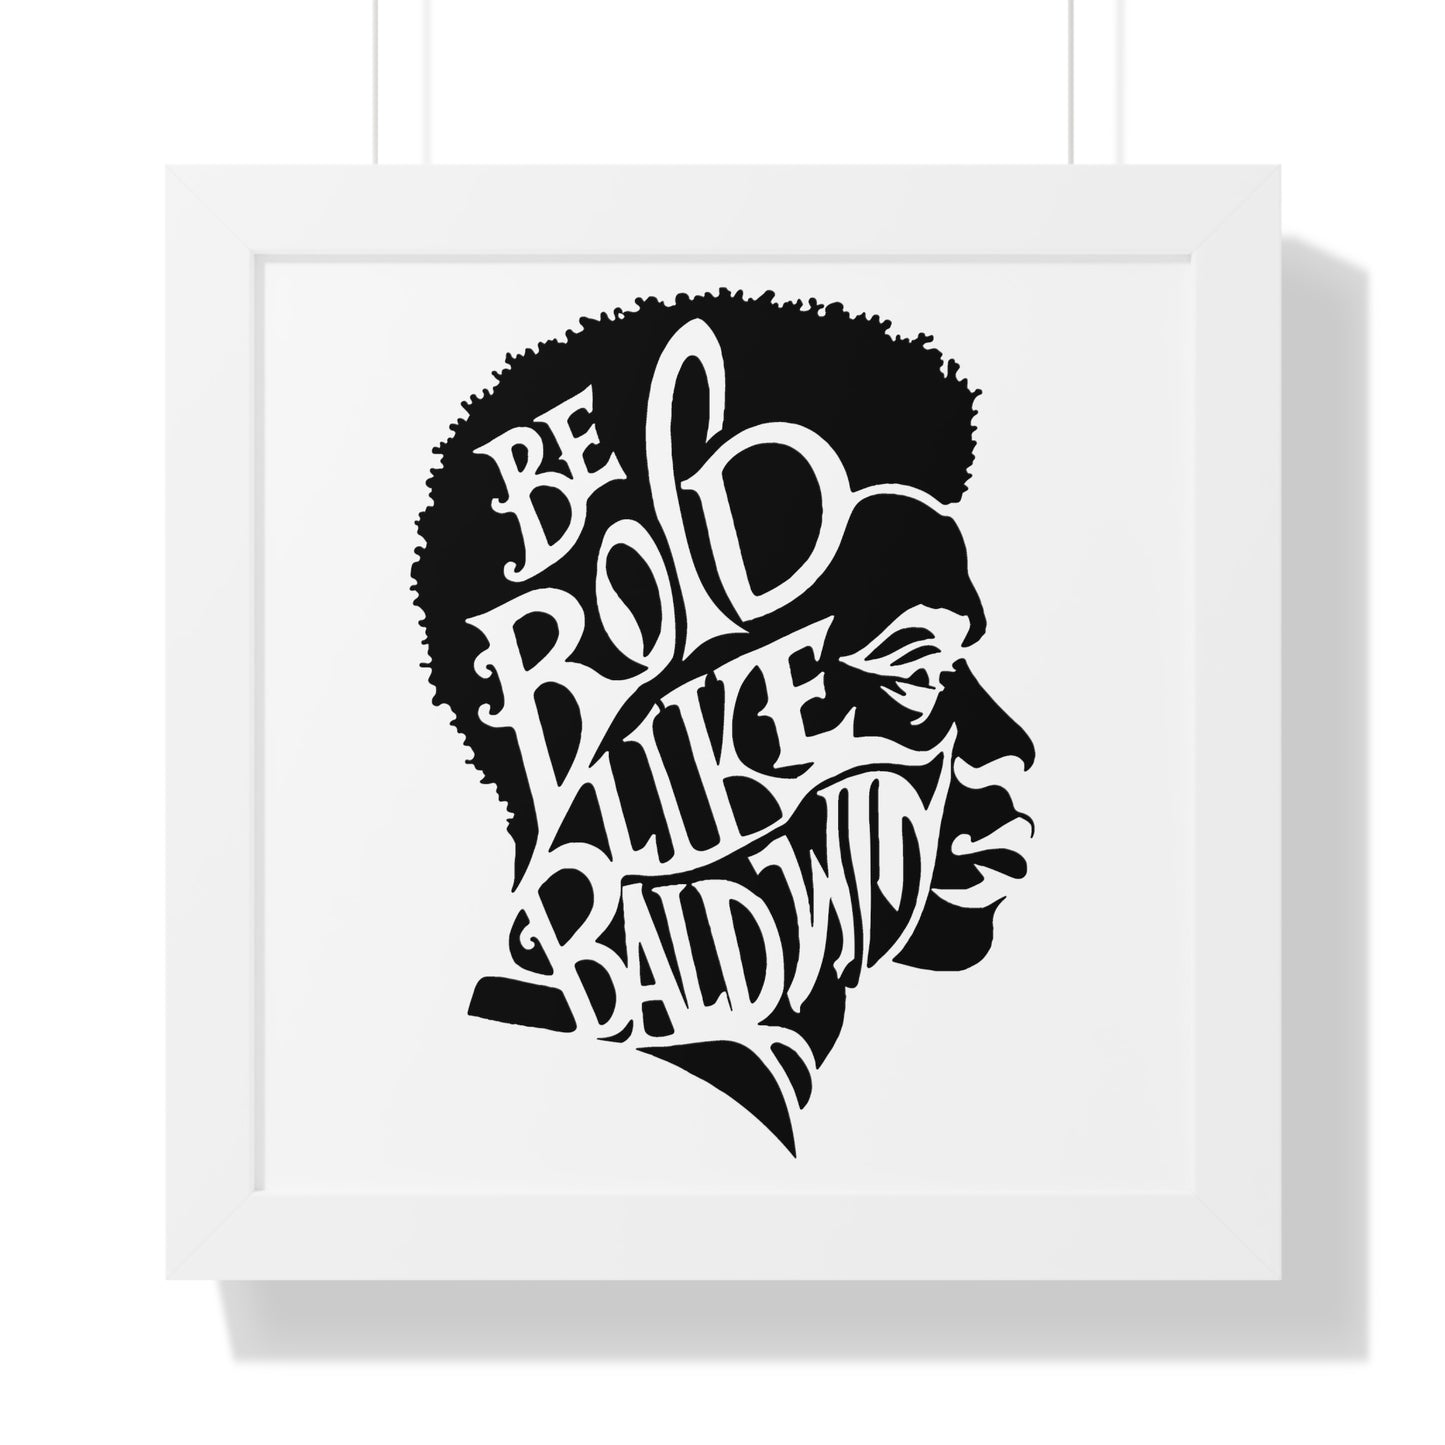 James Baldwin "Be Bold" Framed Wall Poster - Black